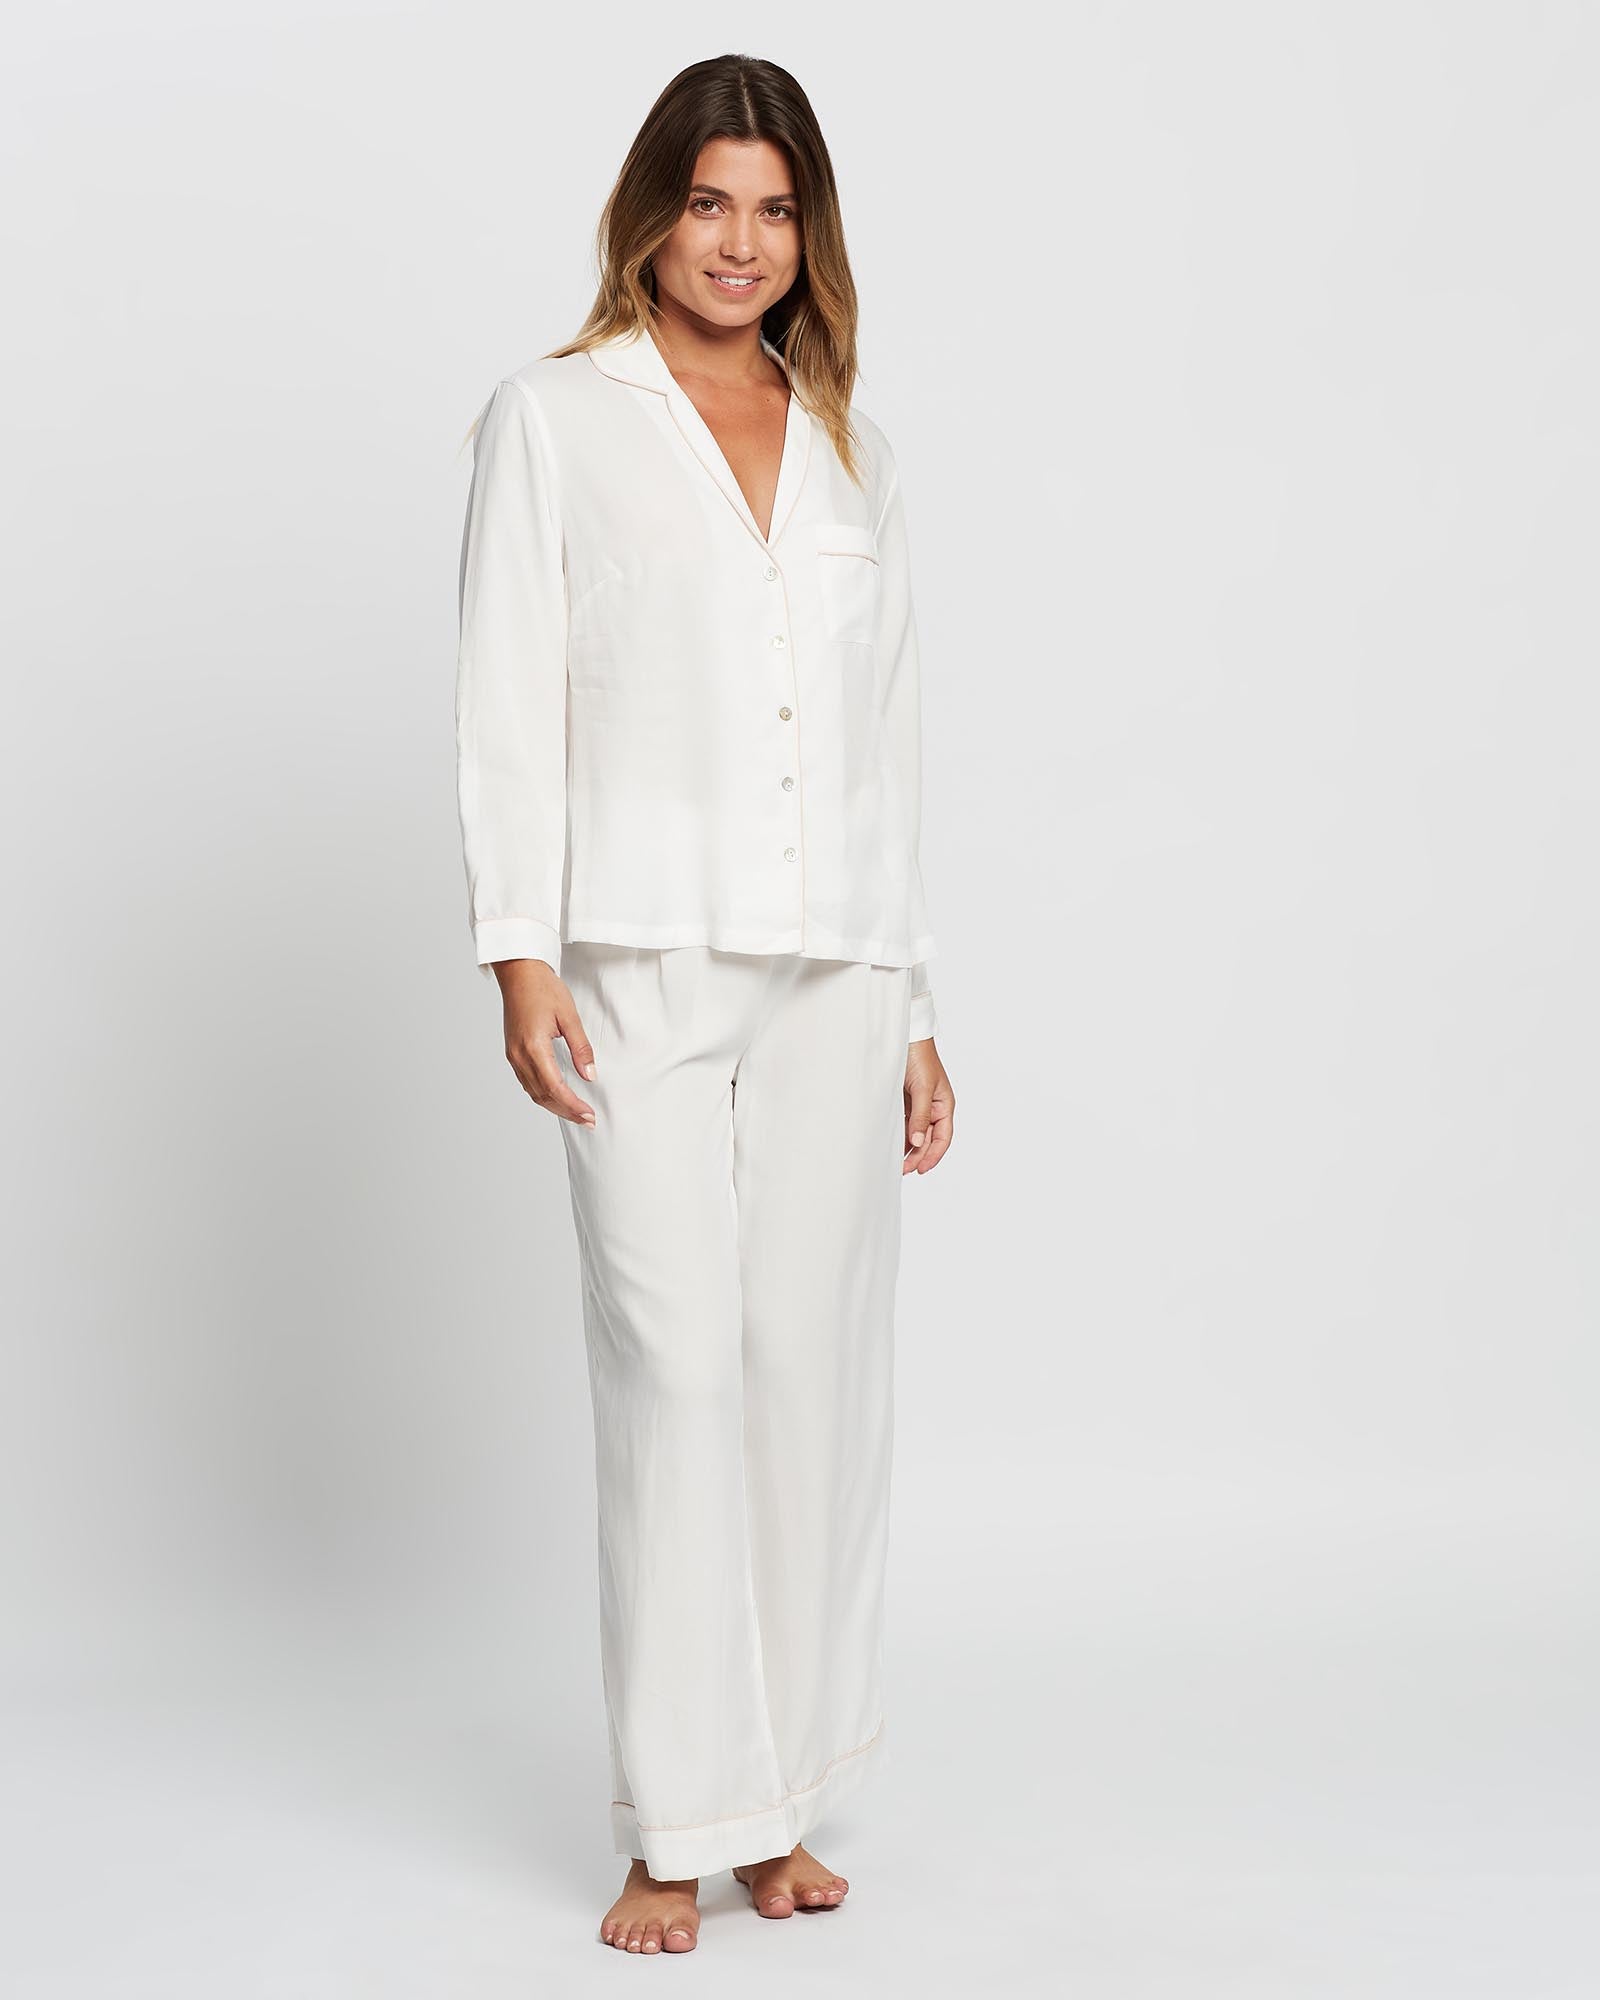 Eva Lounge Tencel™ Pyjama Set - White with Blush Piping